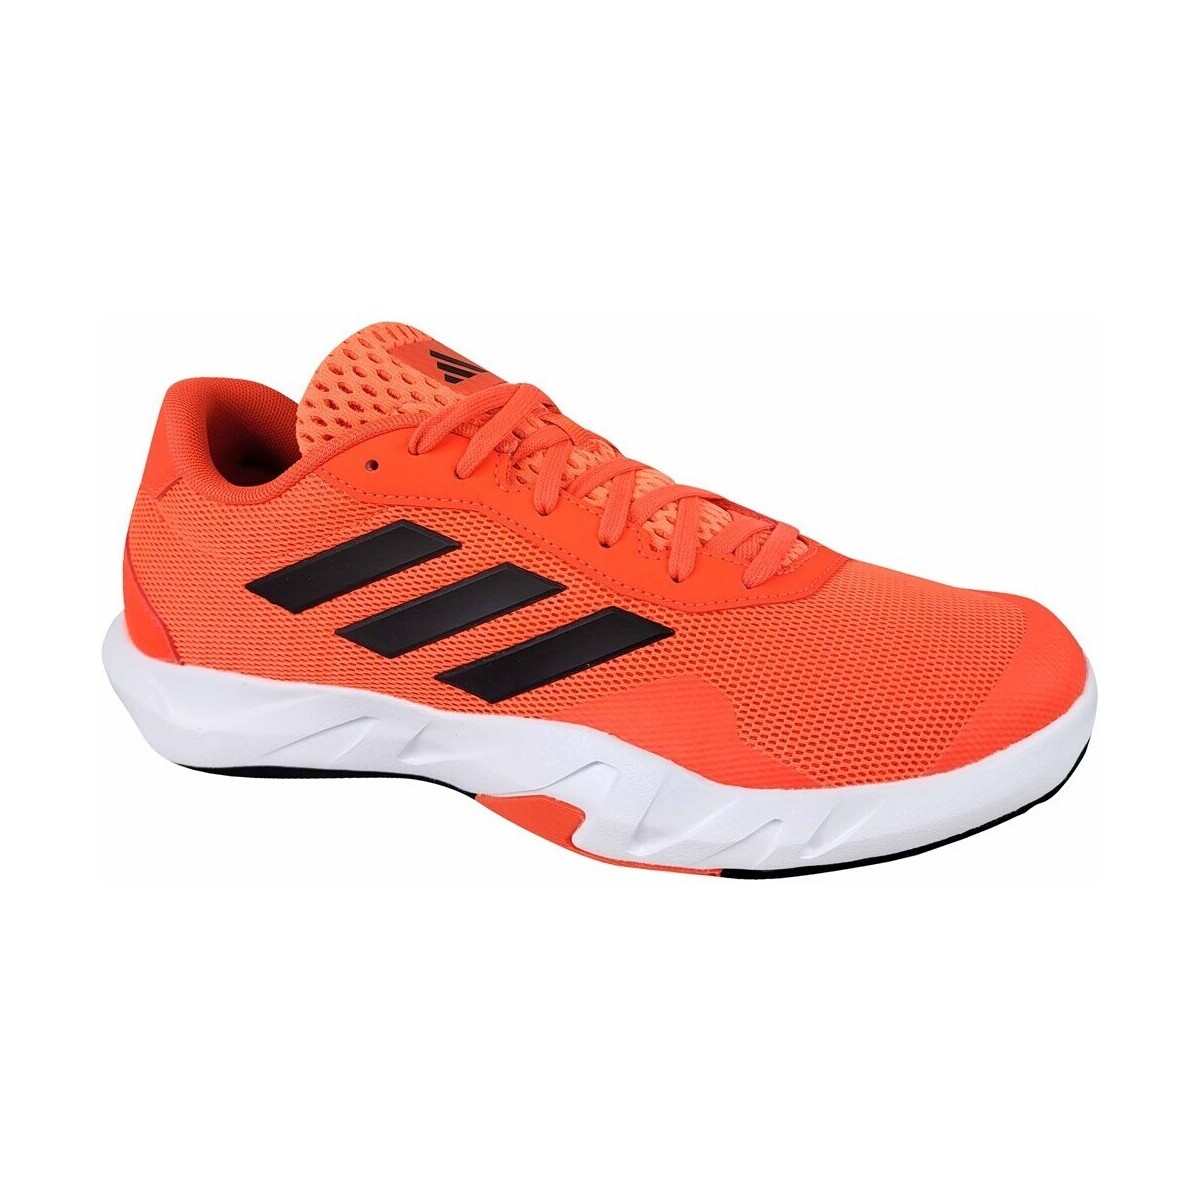 Adidas Amplimove Trainer Orange